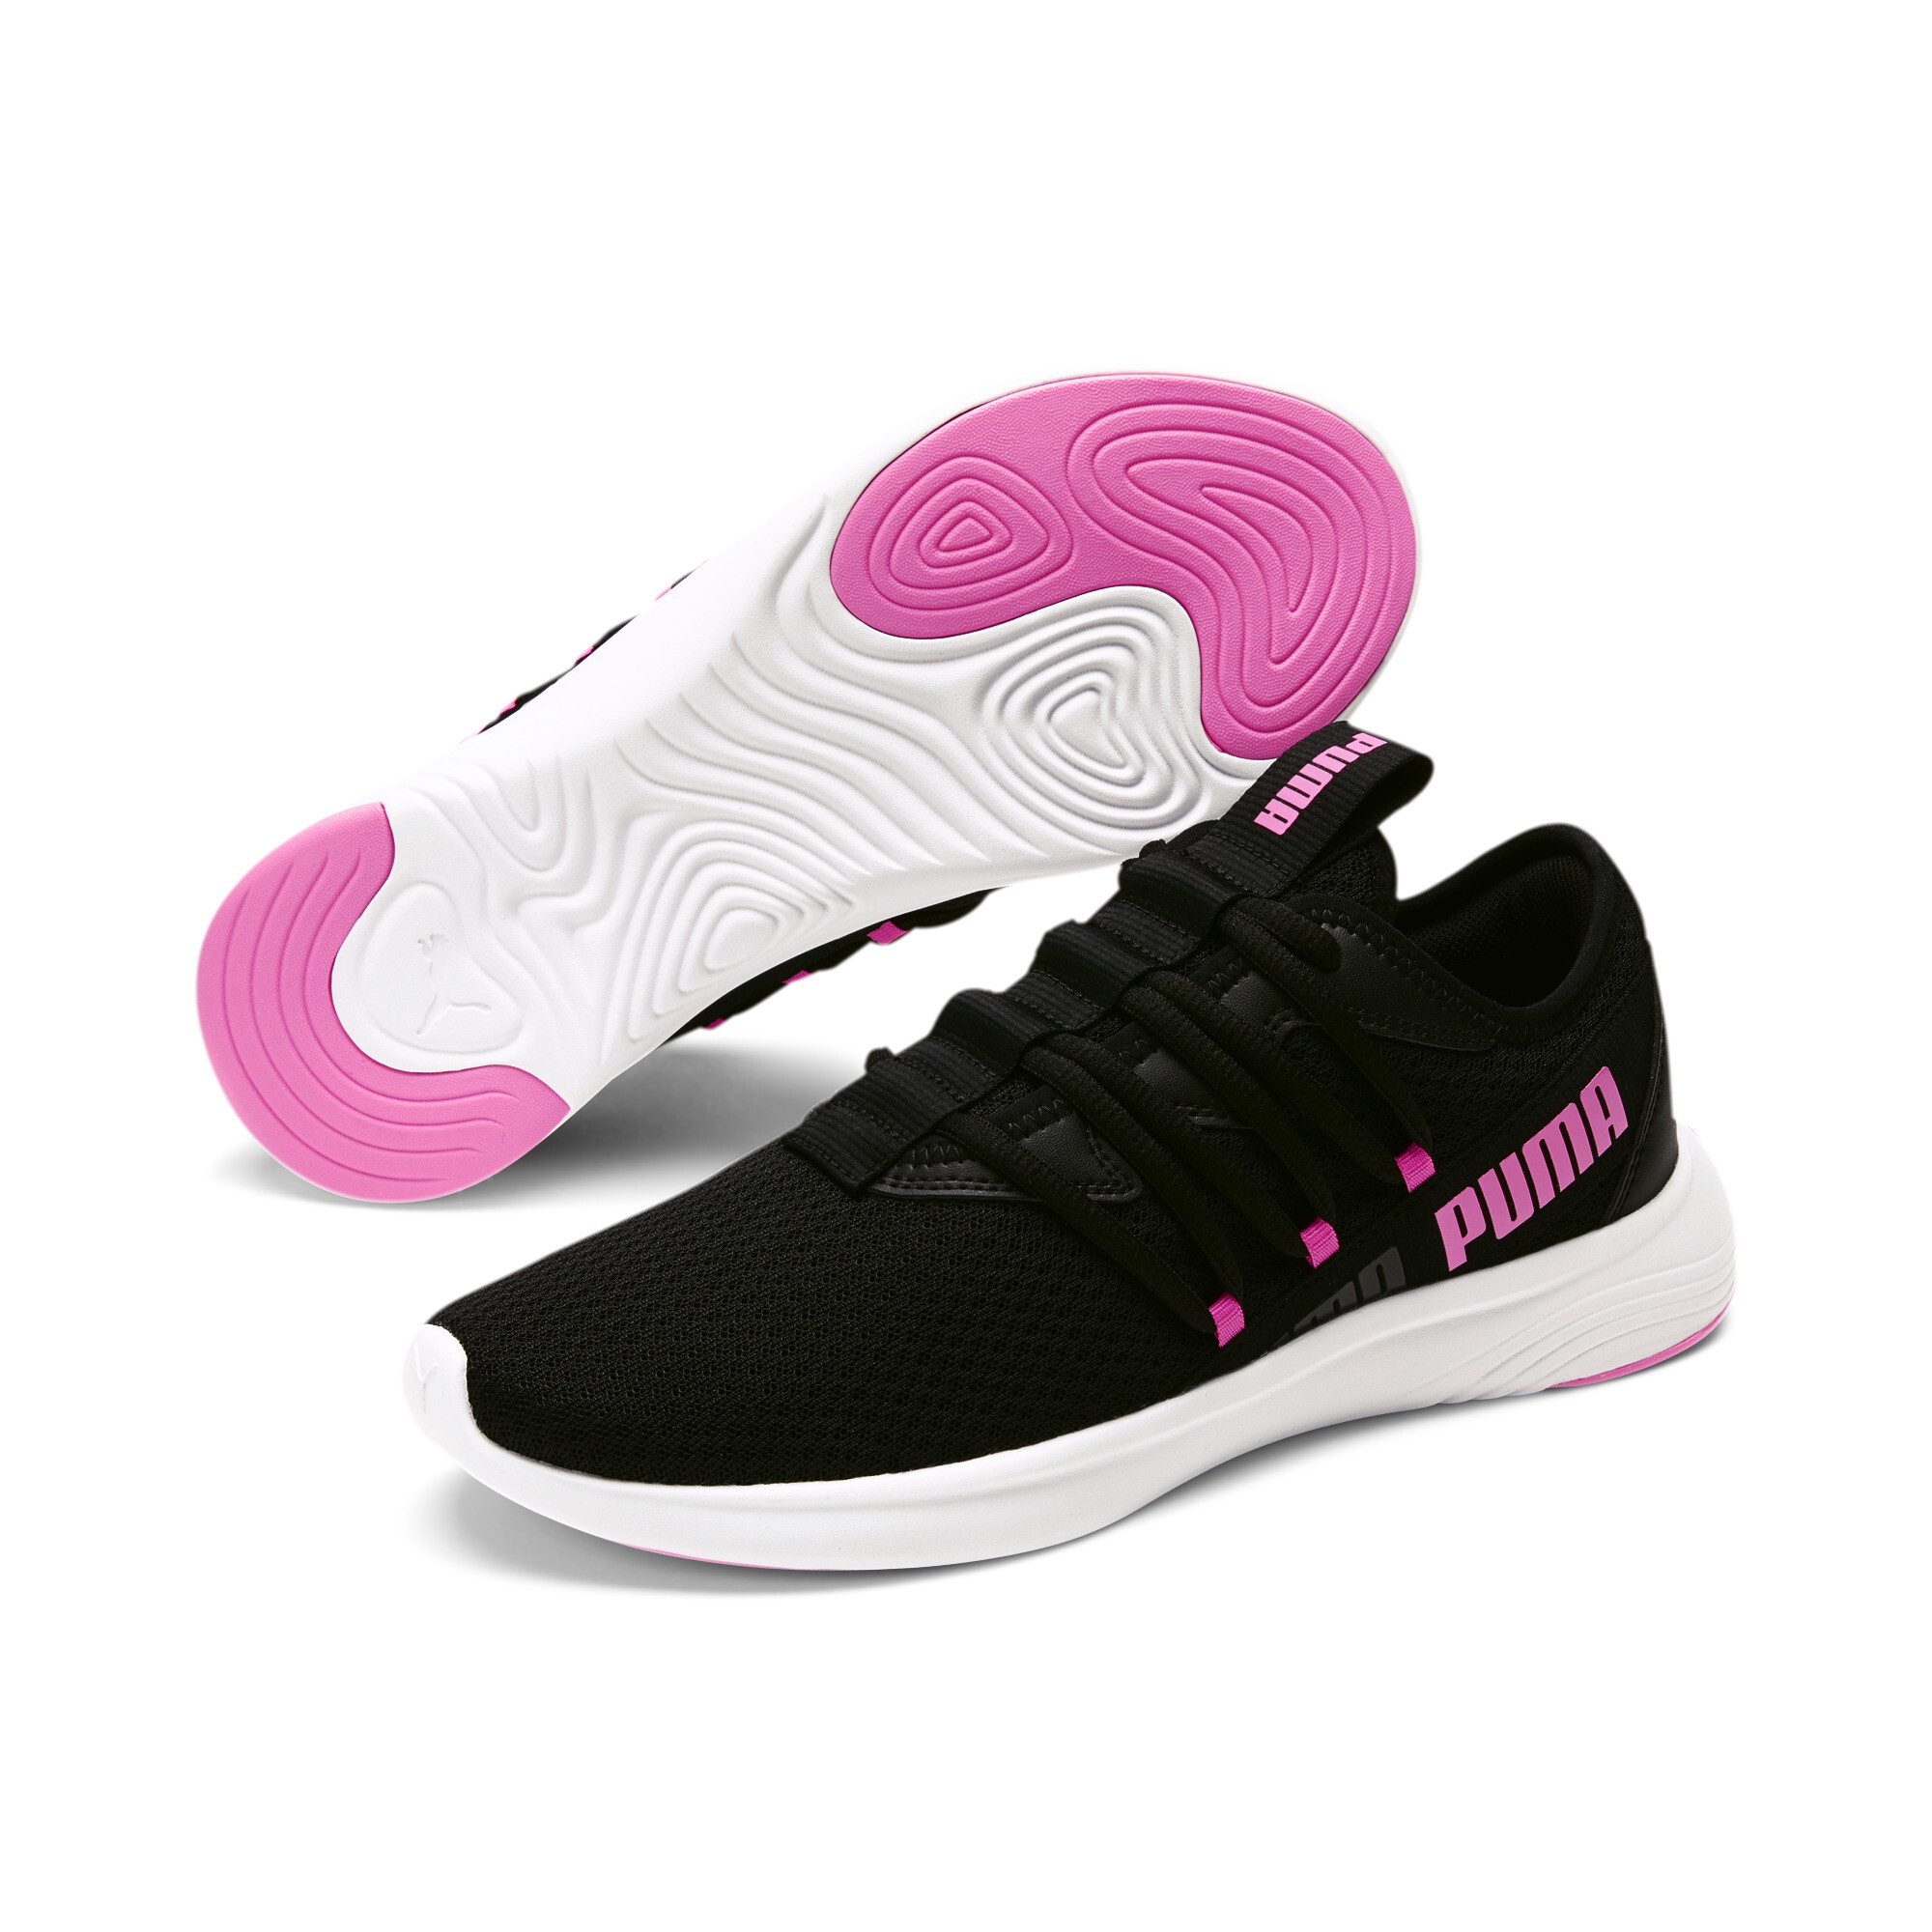 PUMA Women's Star Vital Training Shoes | eBay